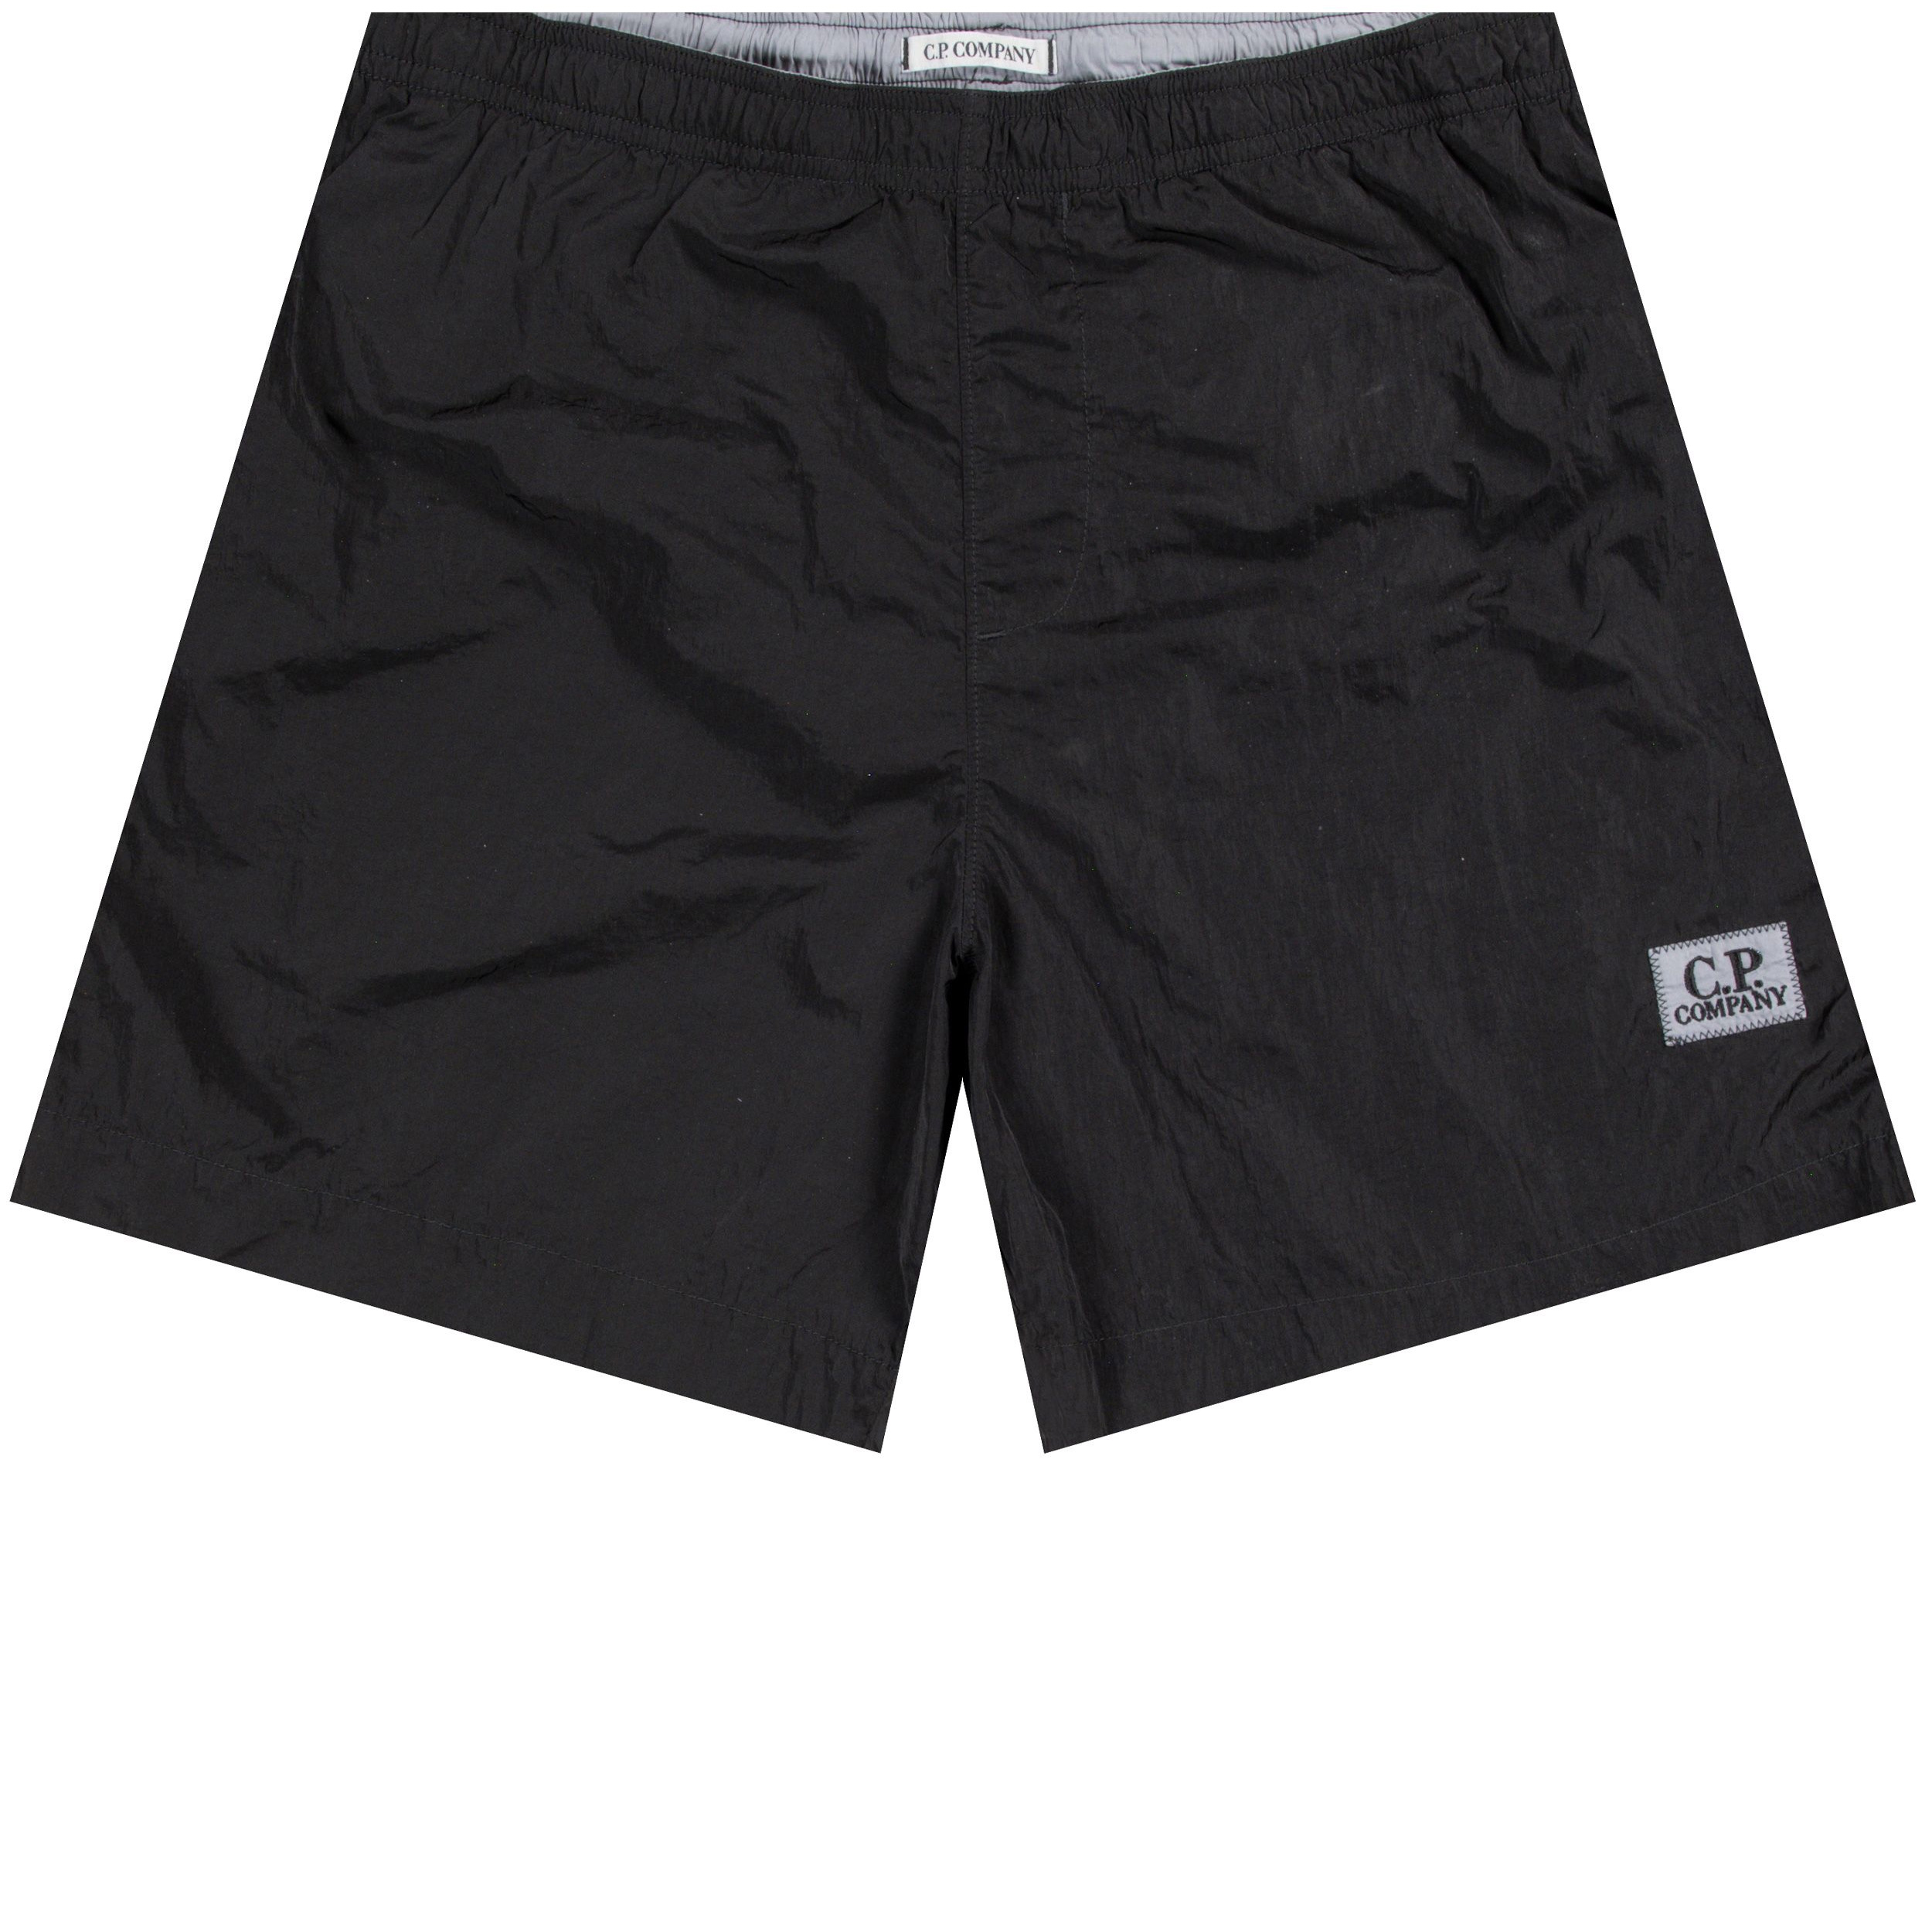 CP Company 'Chrome Garment' Dyed Logo Swim Shorts Black